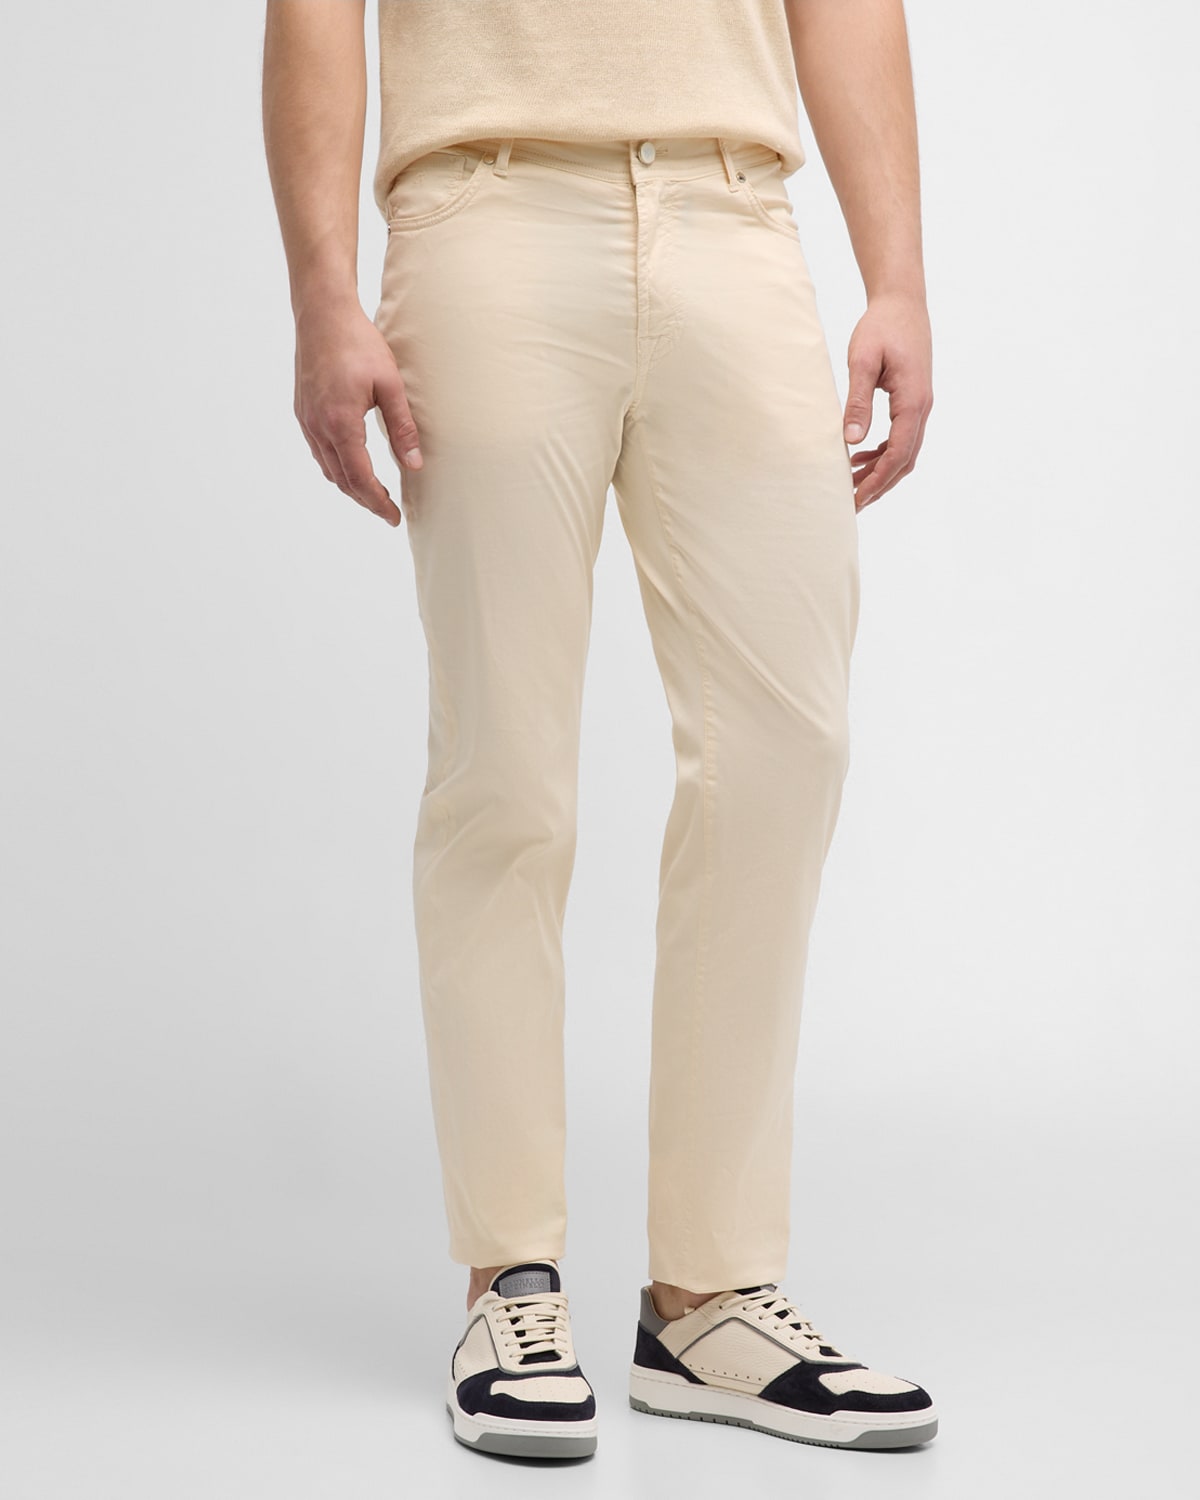 Men's Micropique 5-Pocket Pants